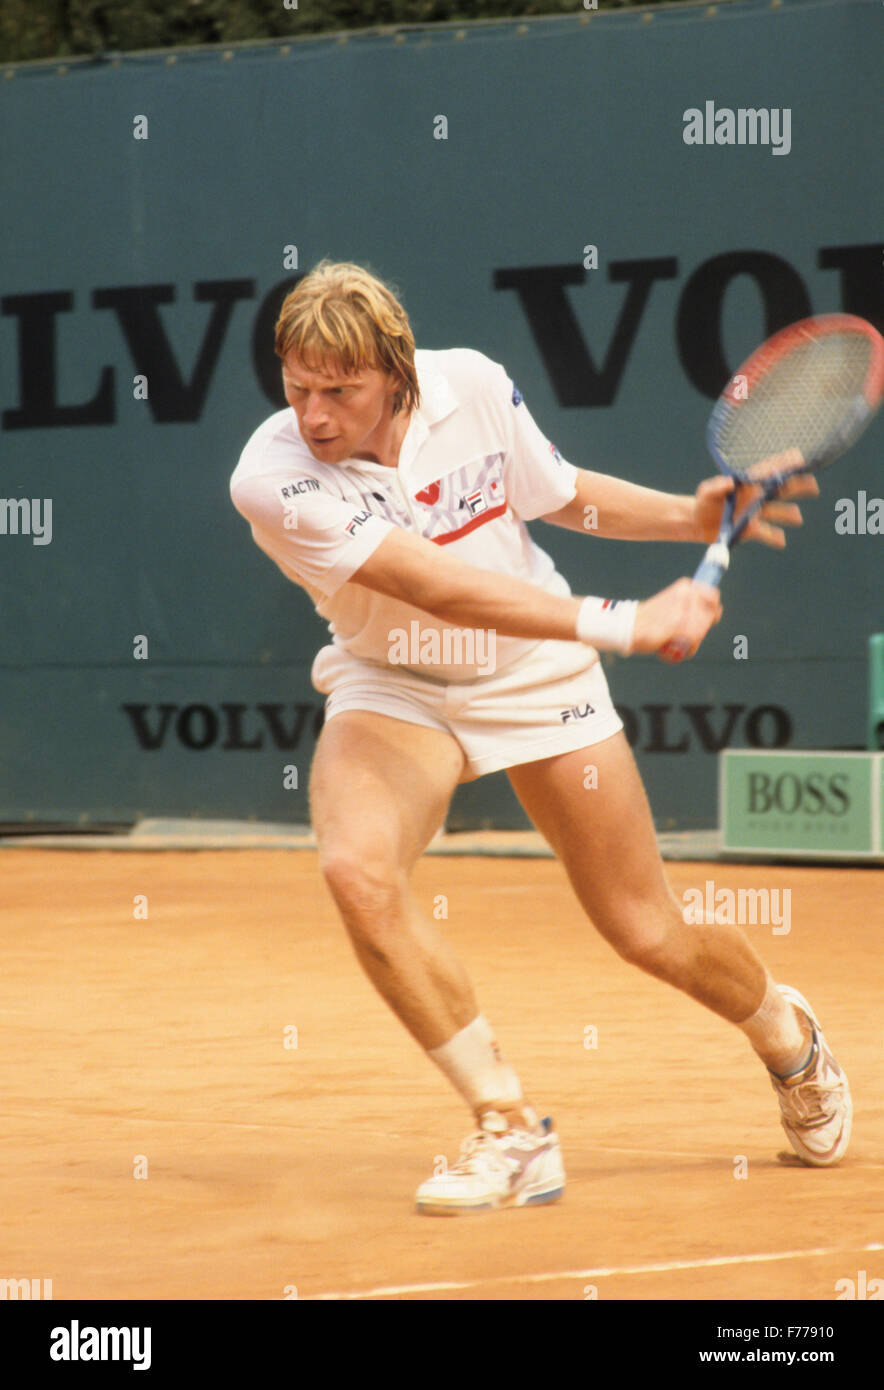 Boris Becker,1987 Foto de stock